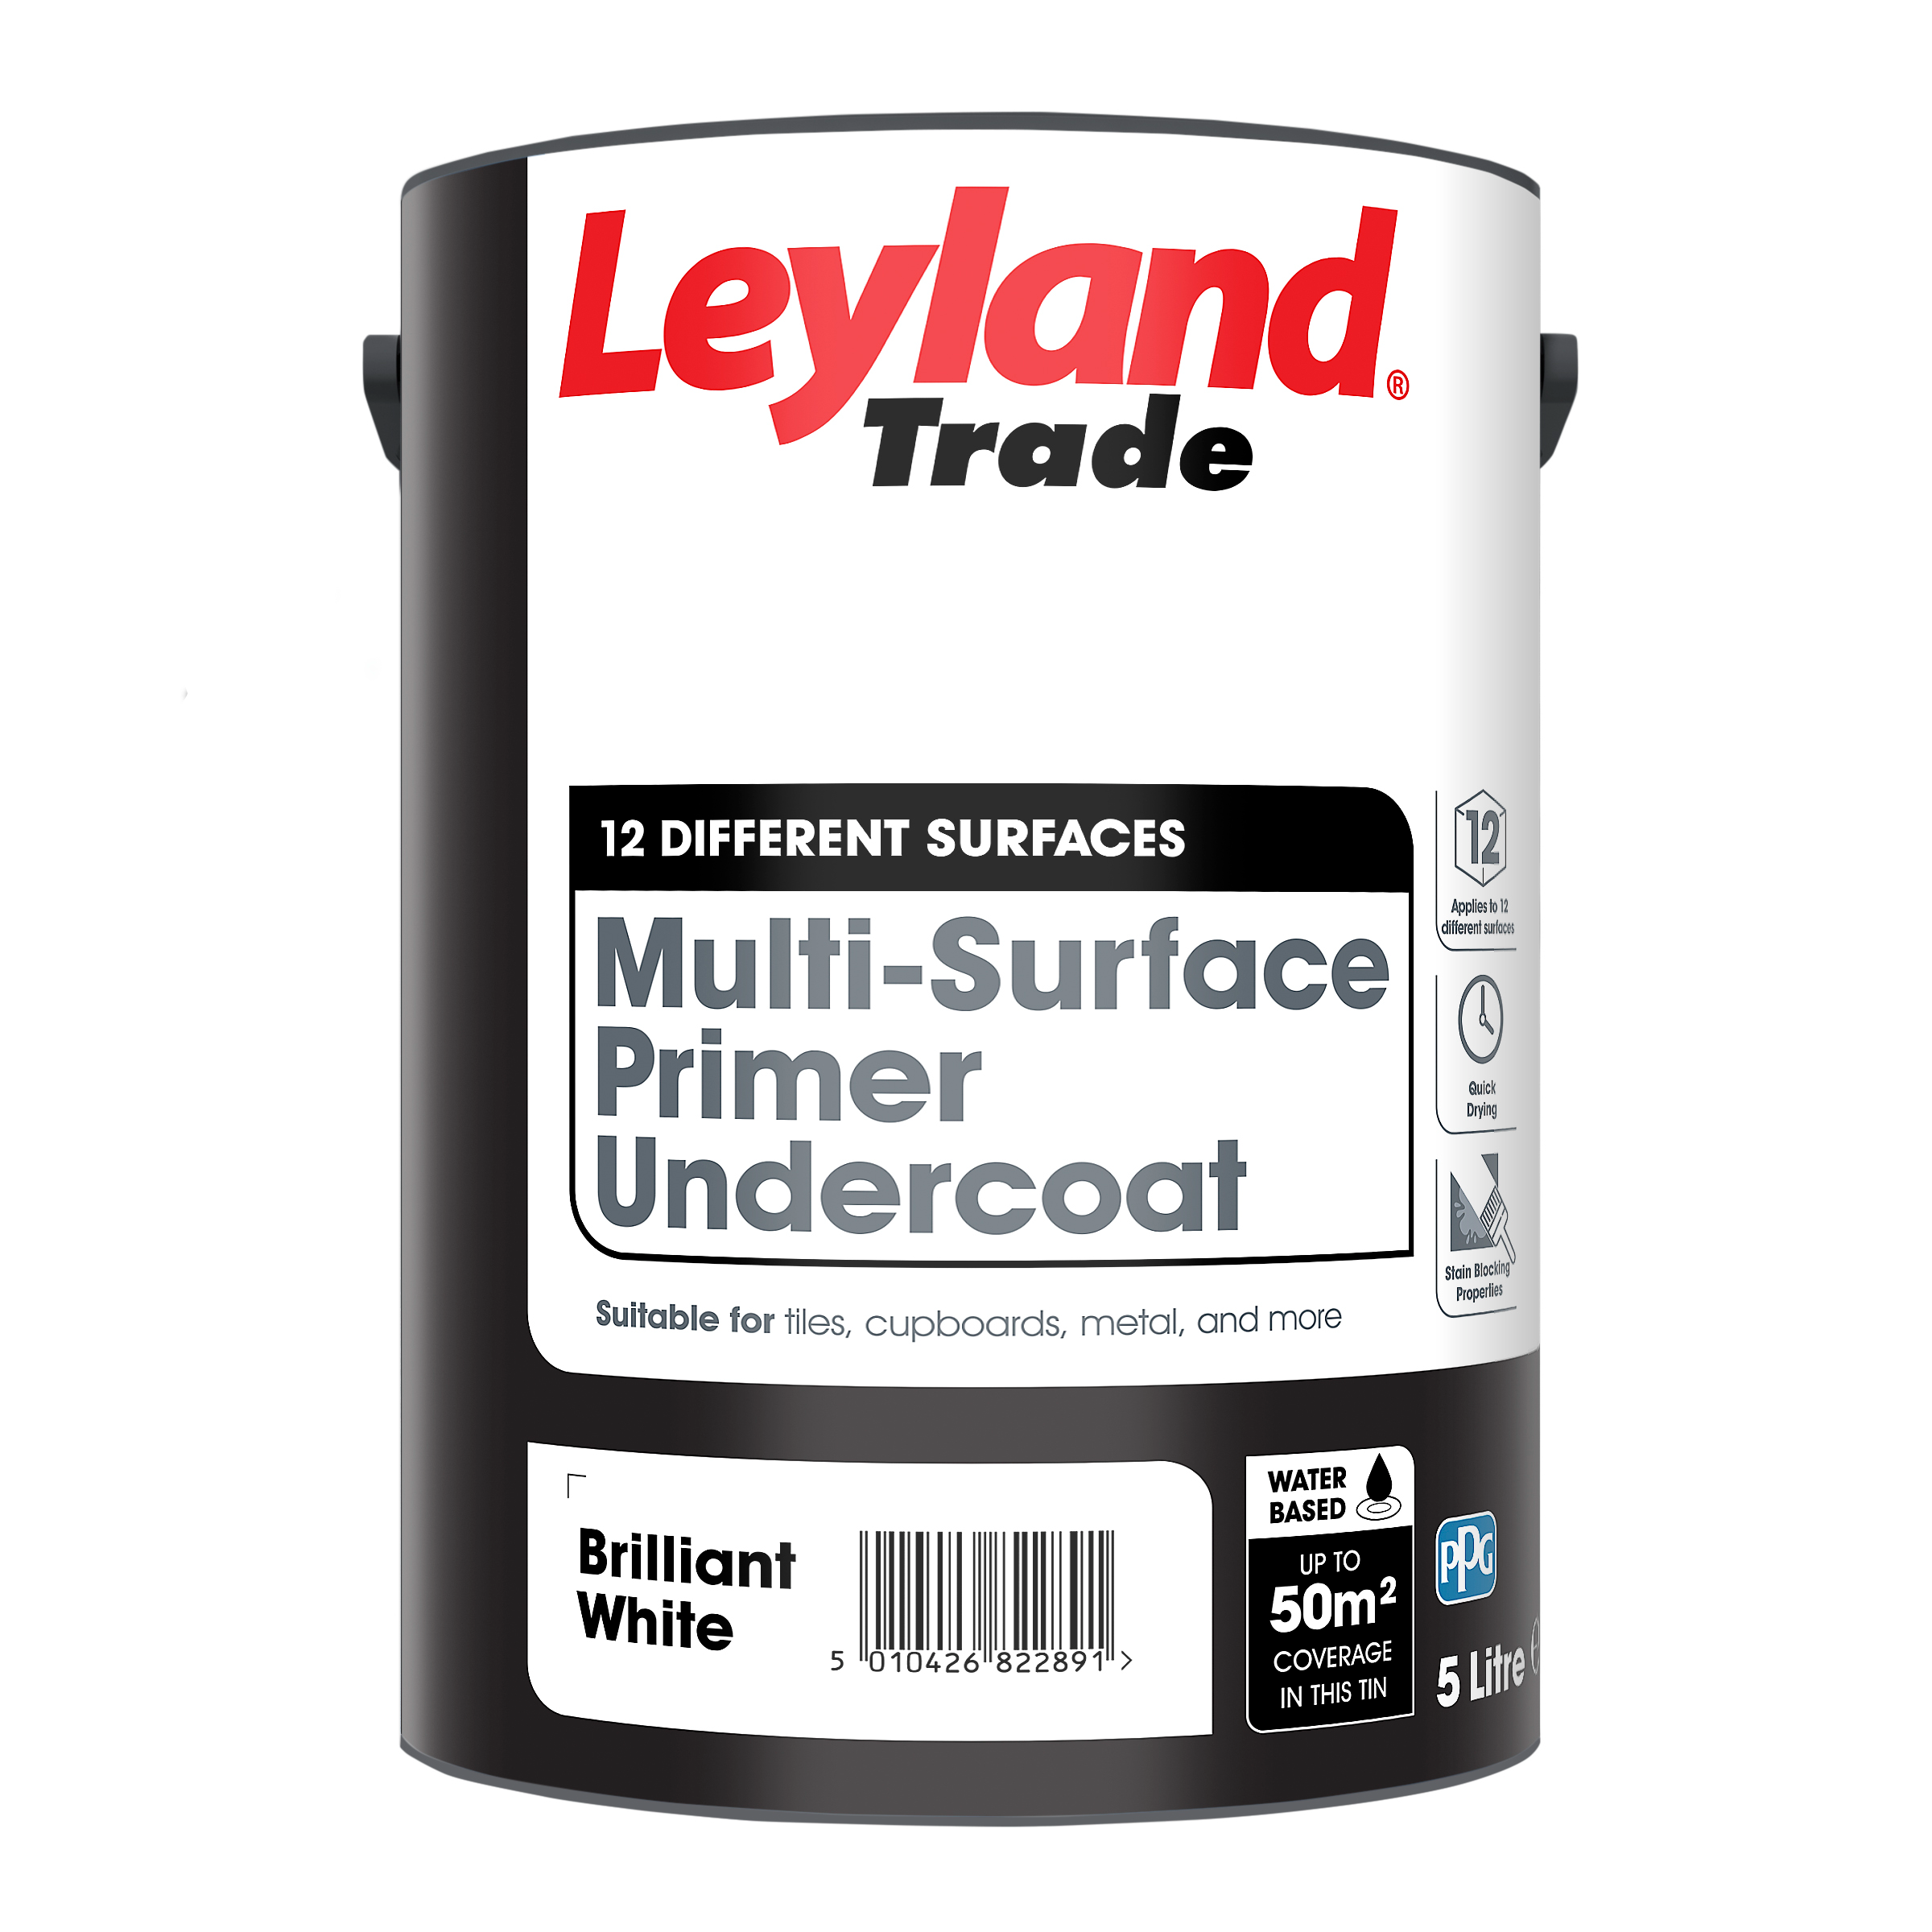 Multi-Surface Primer Undercoat